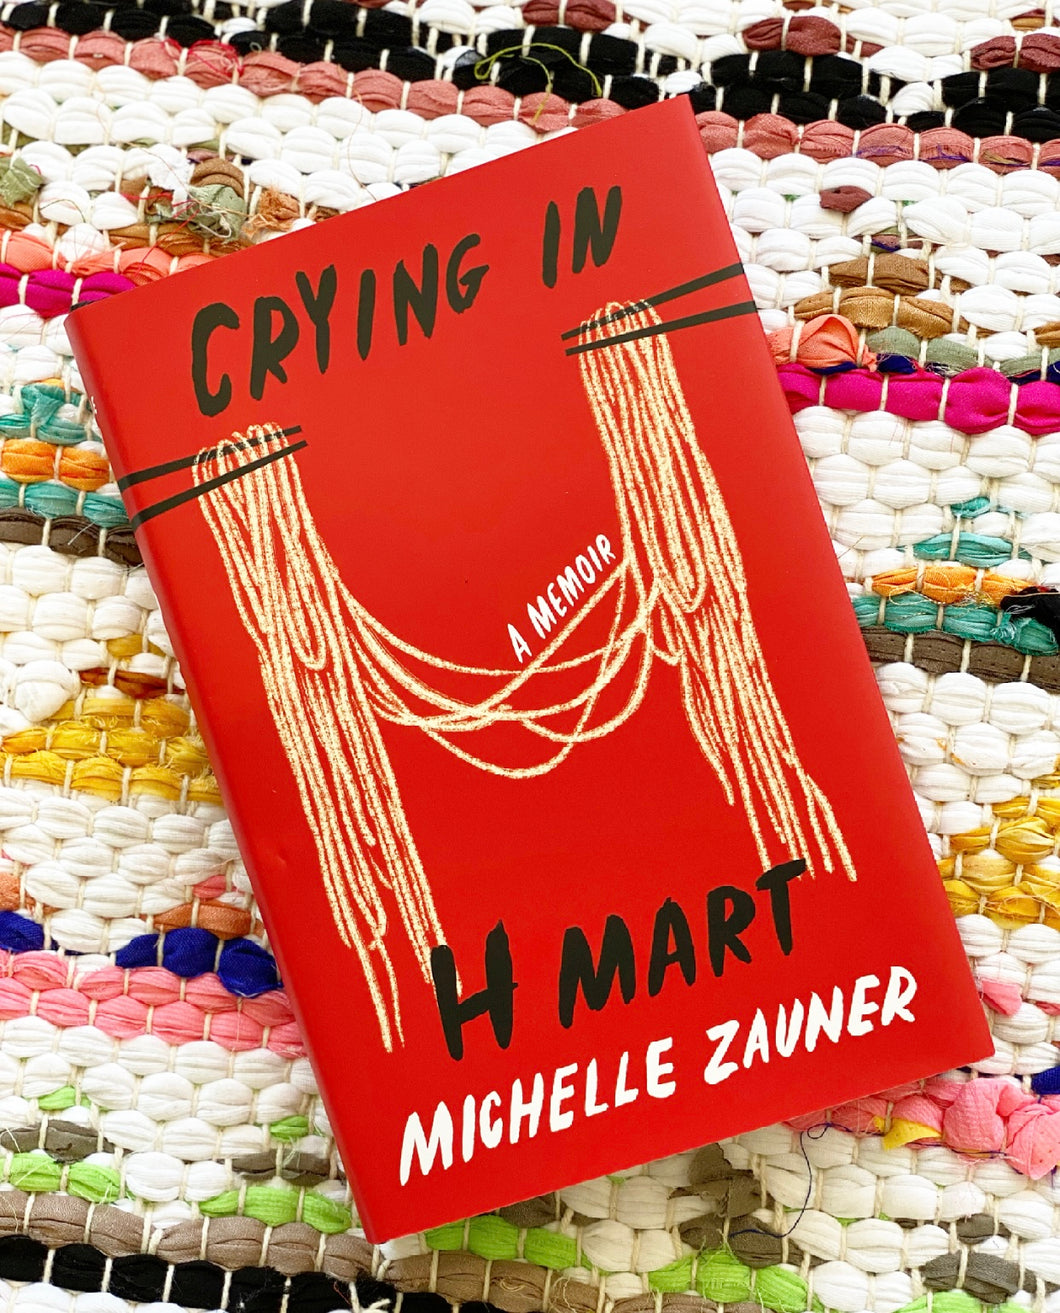 Crying in H Mart: A Memoir | Michelle Zauner